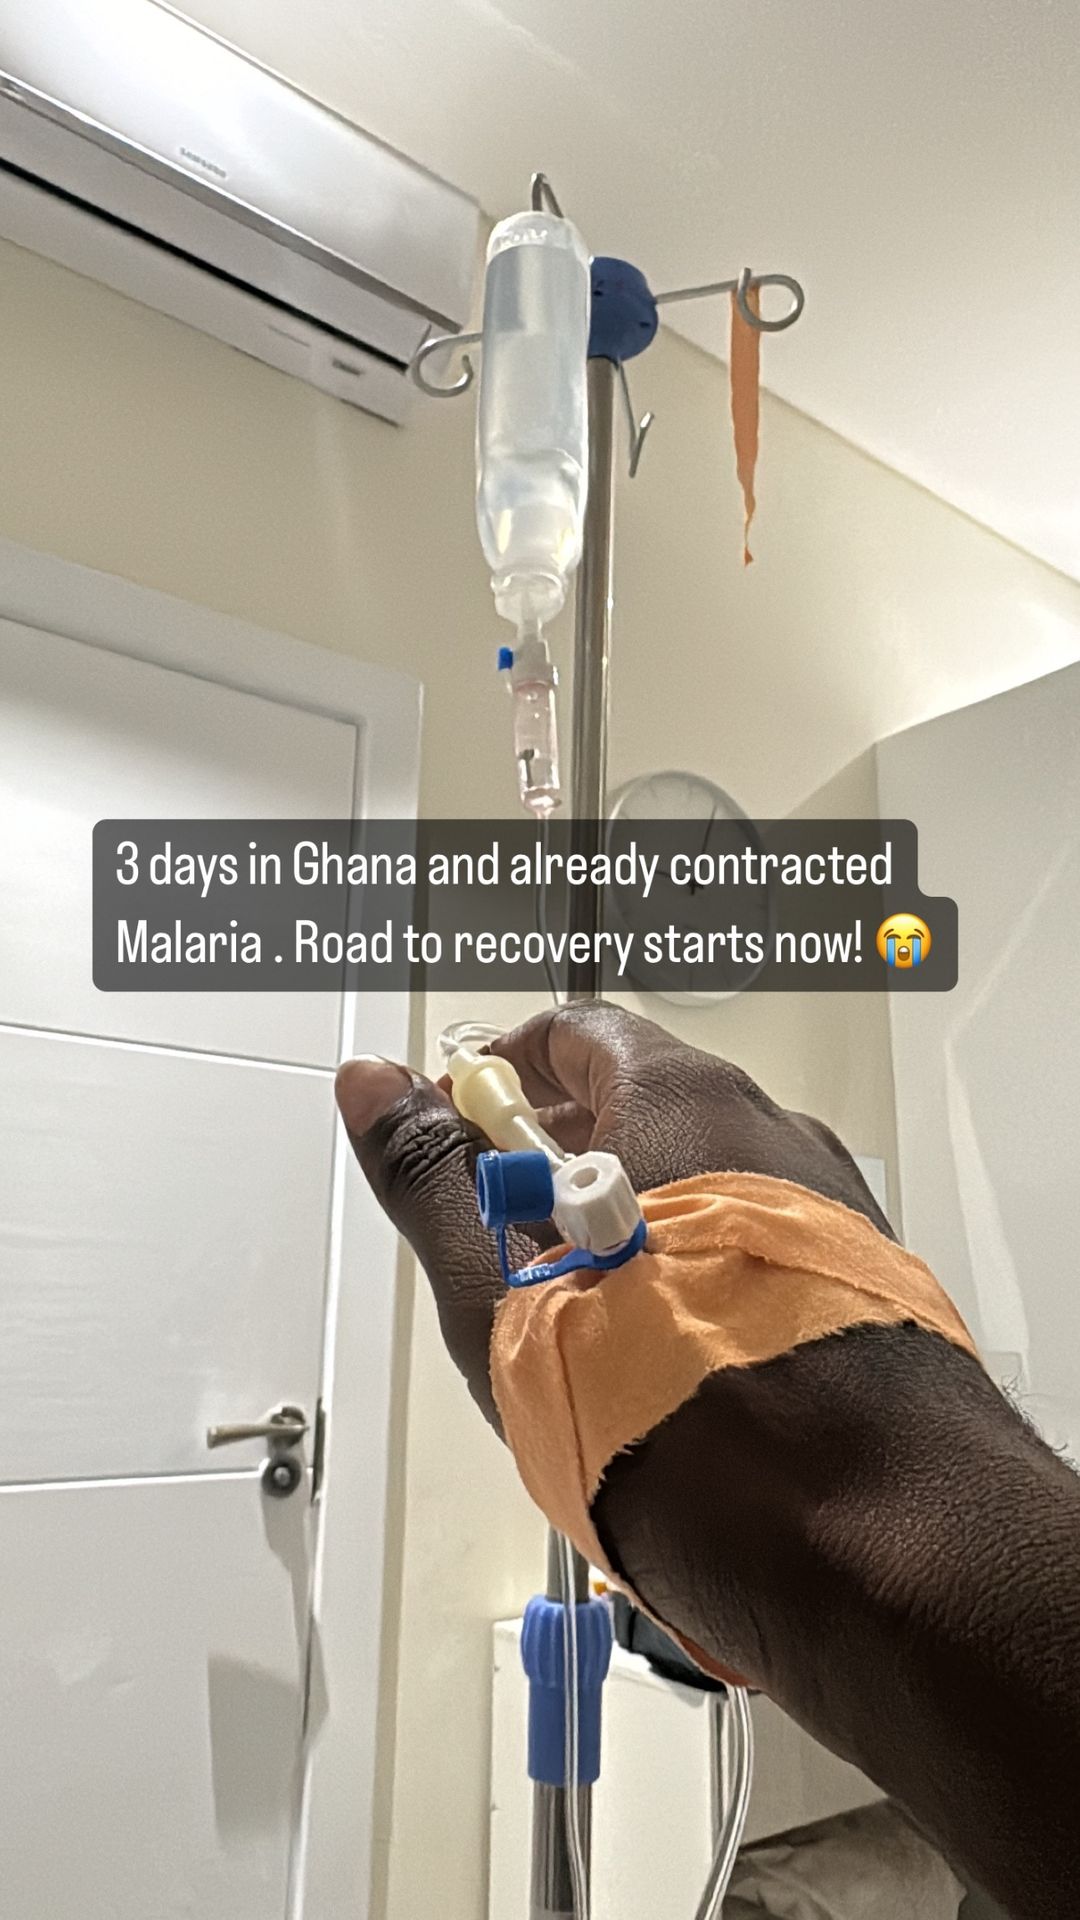 TOWIE Star Vas Morgan Hospitalized with Malaria